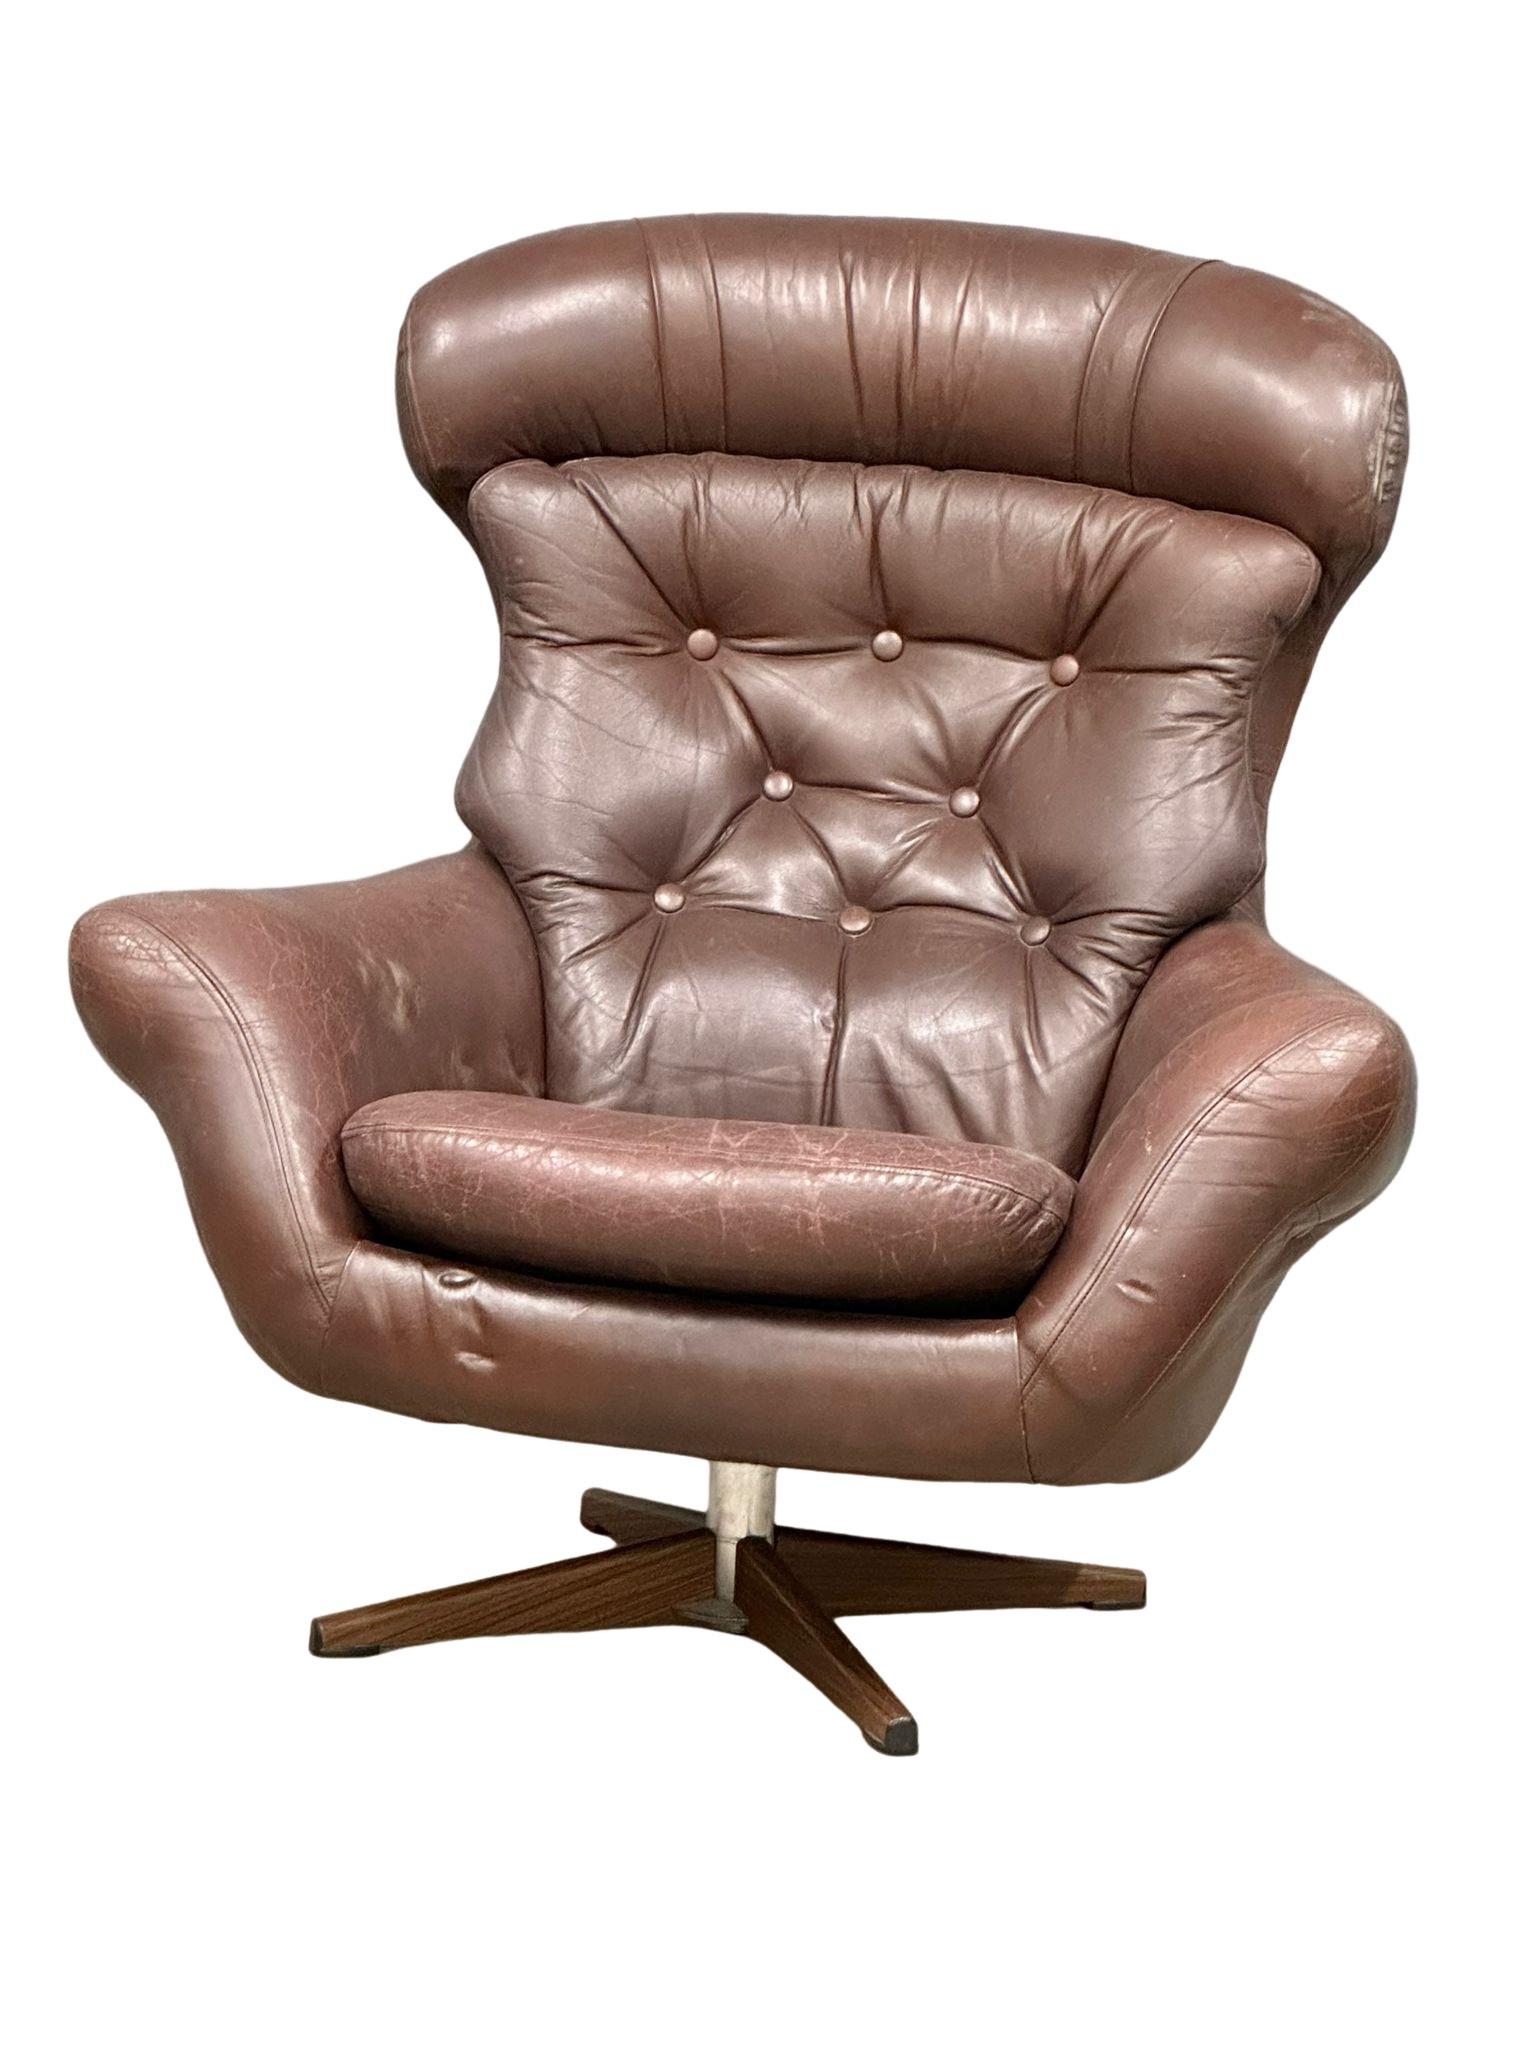 A Swedish Mid Century Gungan Slatte leather swivel chair on faux rosewood base.1